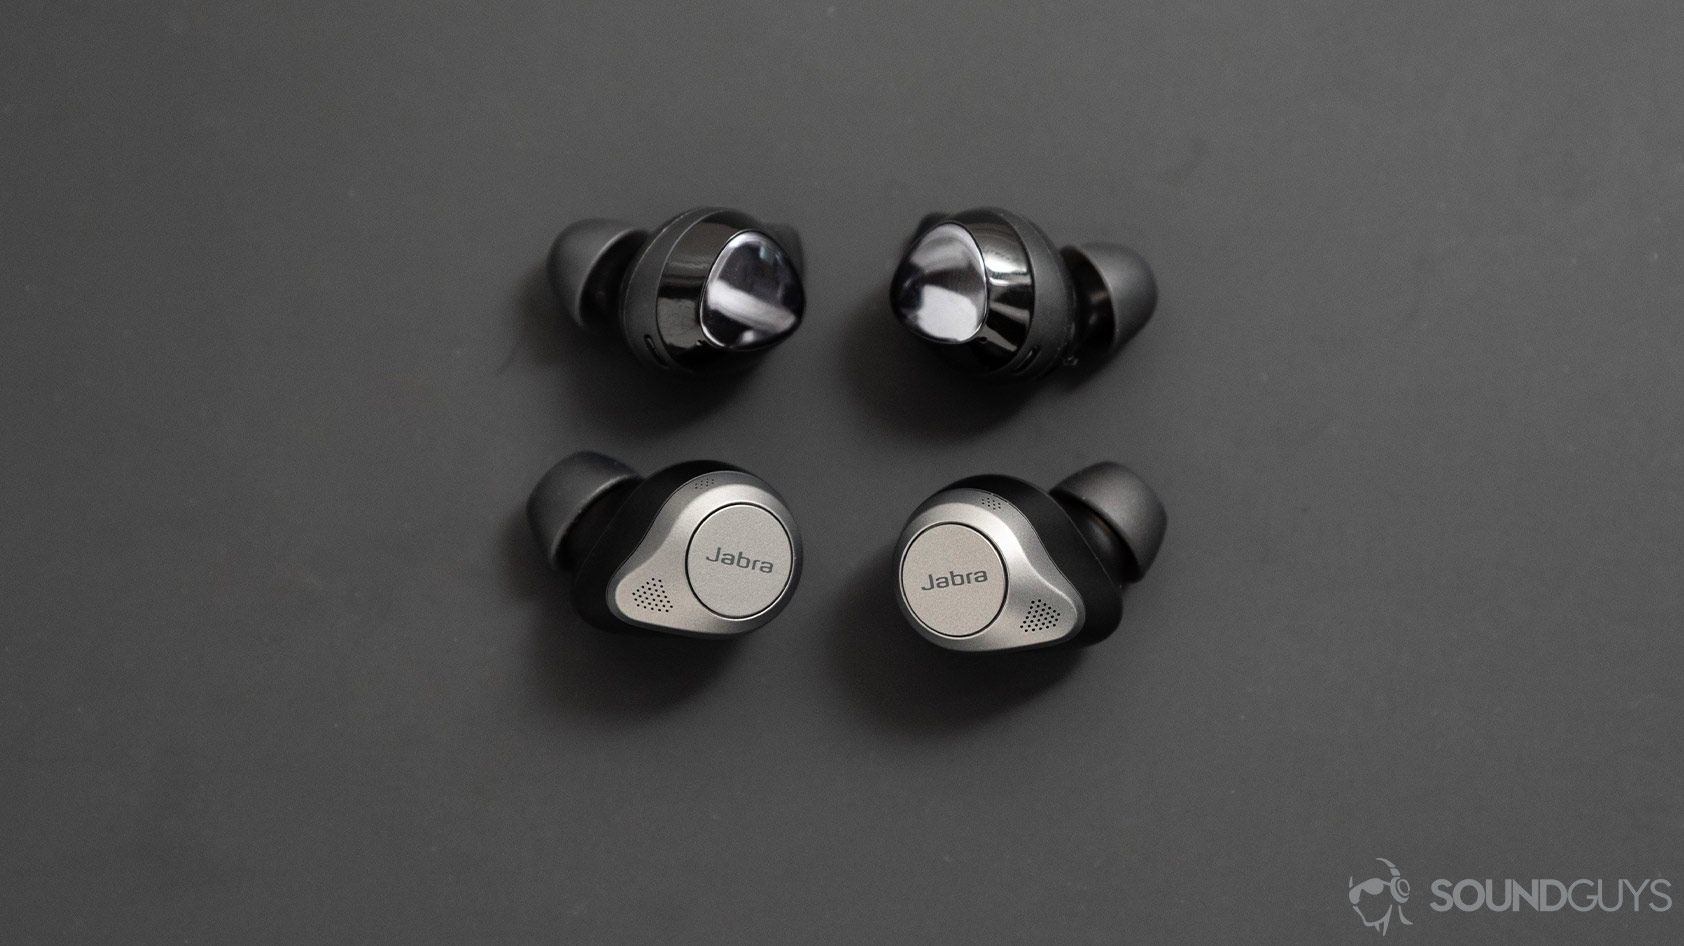 Jabra Elite 85t True Wireless Bluetooth Earbuds, Titanium Black